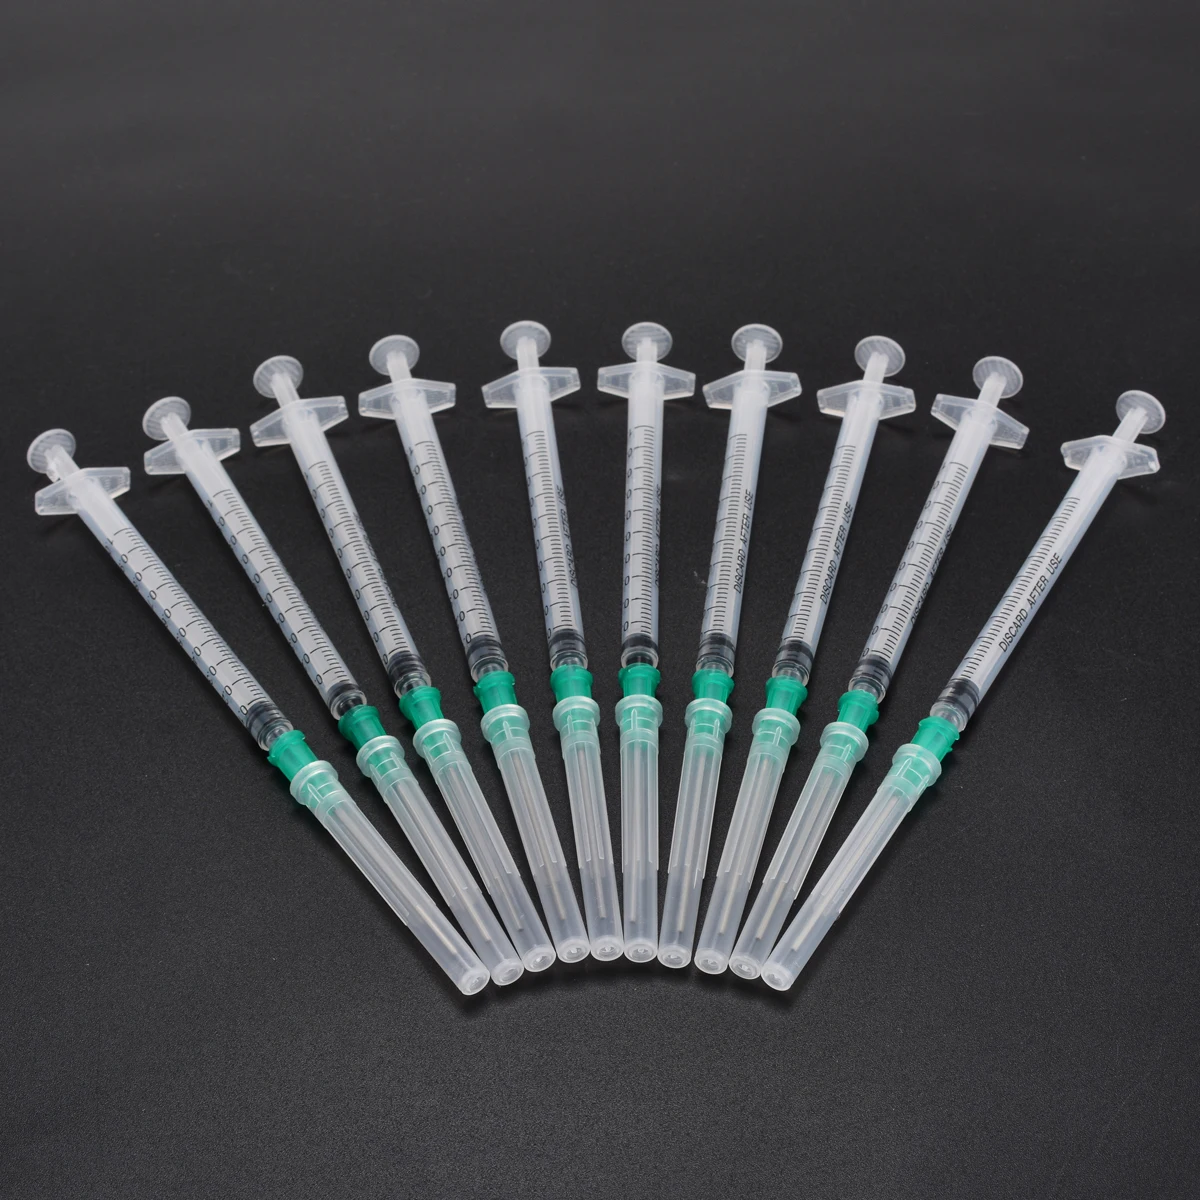 10pcs/Set 1ml Measure Syringe +18Ga 1.5 inch Blunt Tip Needle + Protective Cover Caps Kit for Industrial Glue Syringe